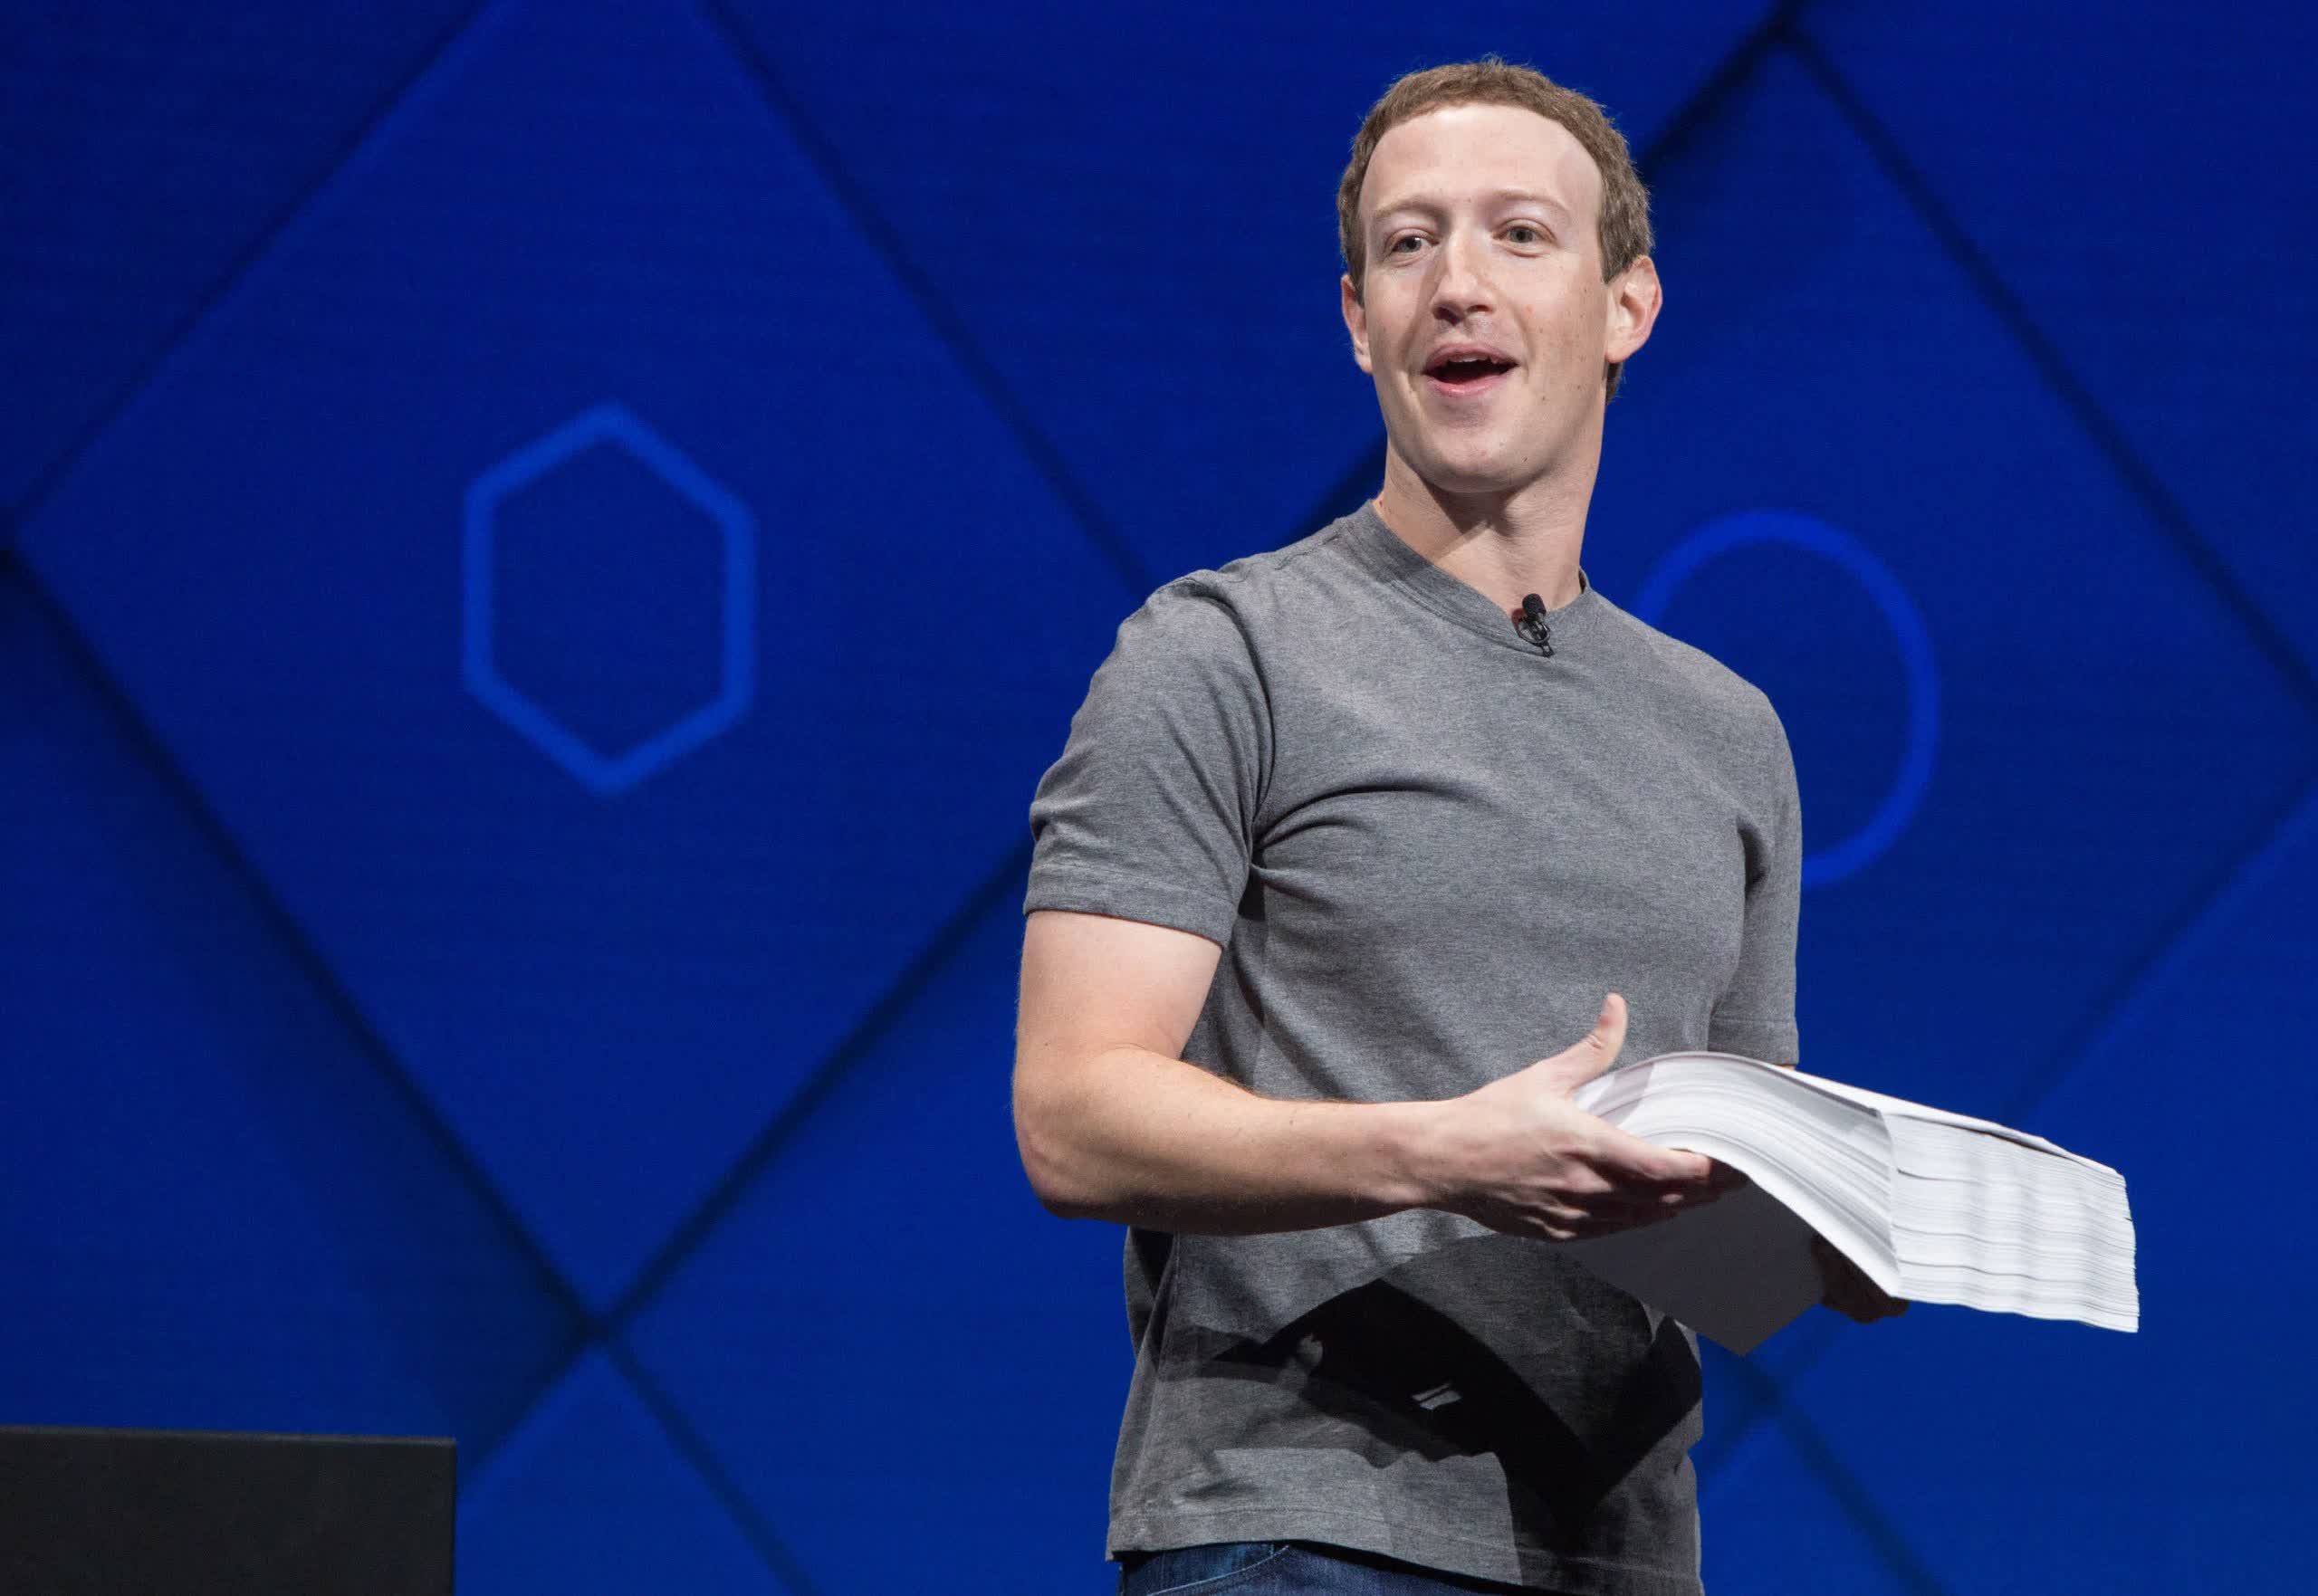 DC Attorney General sues Mark Zuckerberg over Cambridge Analytica scandal